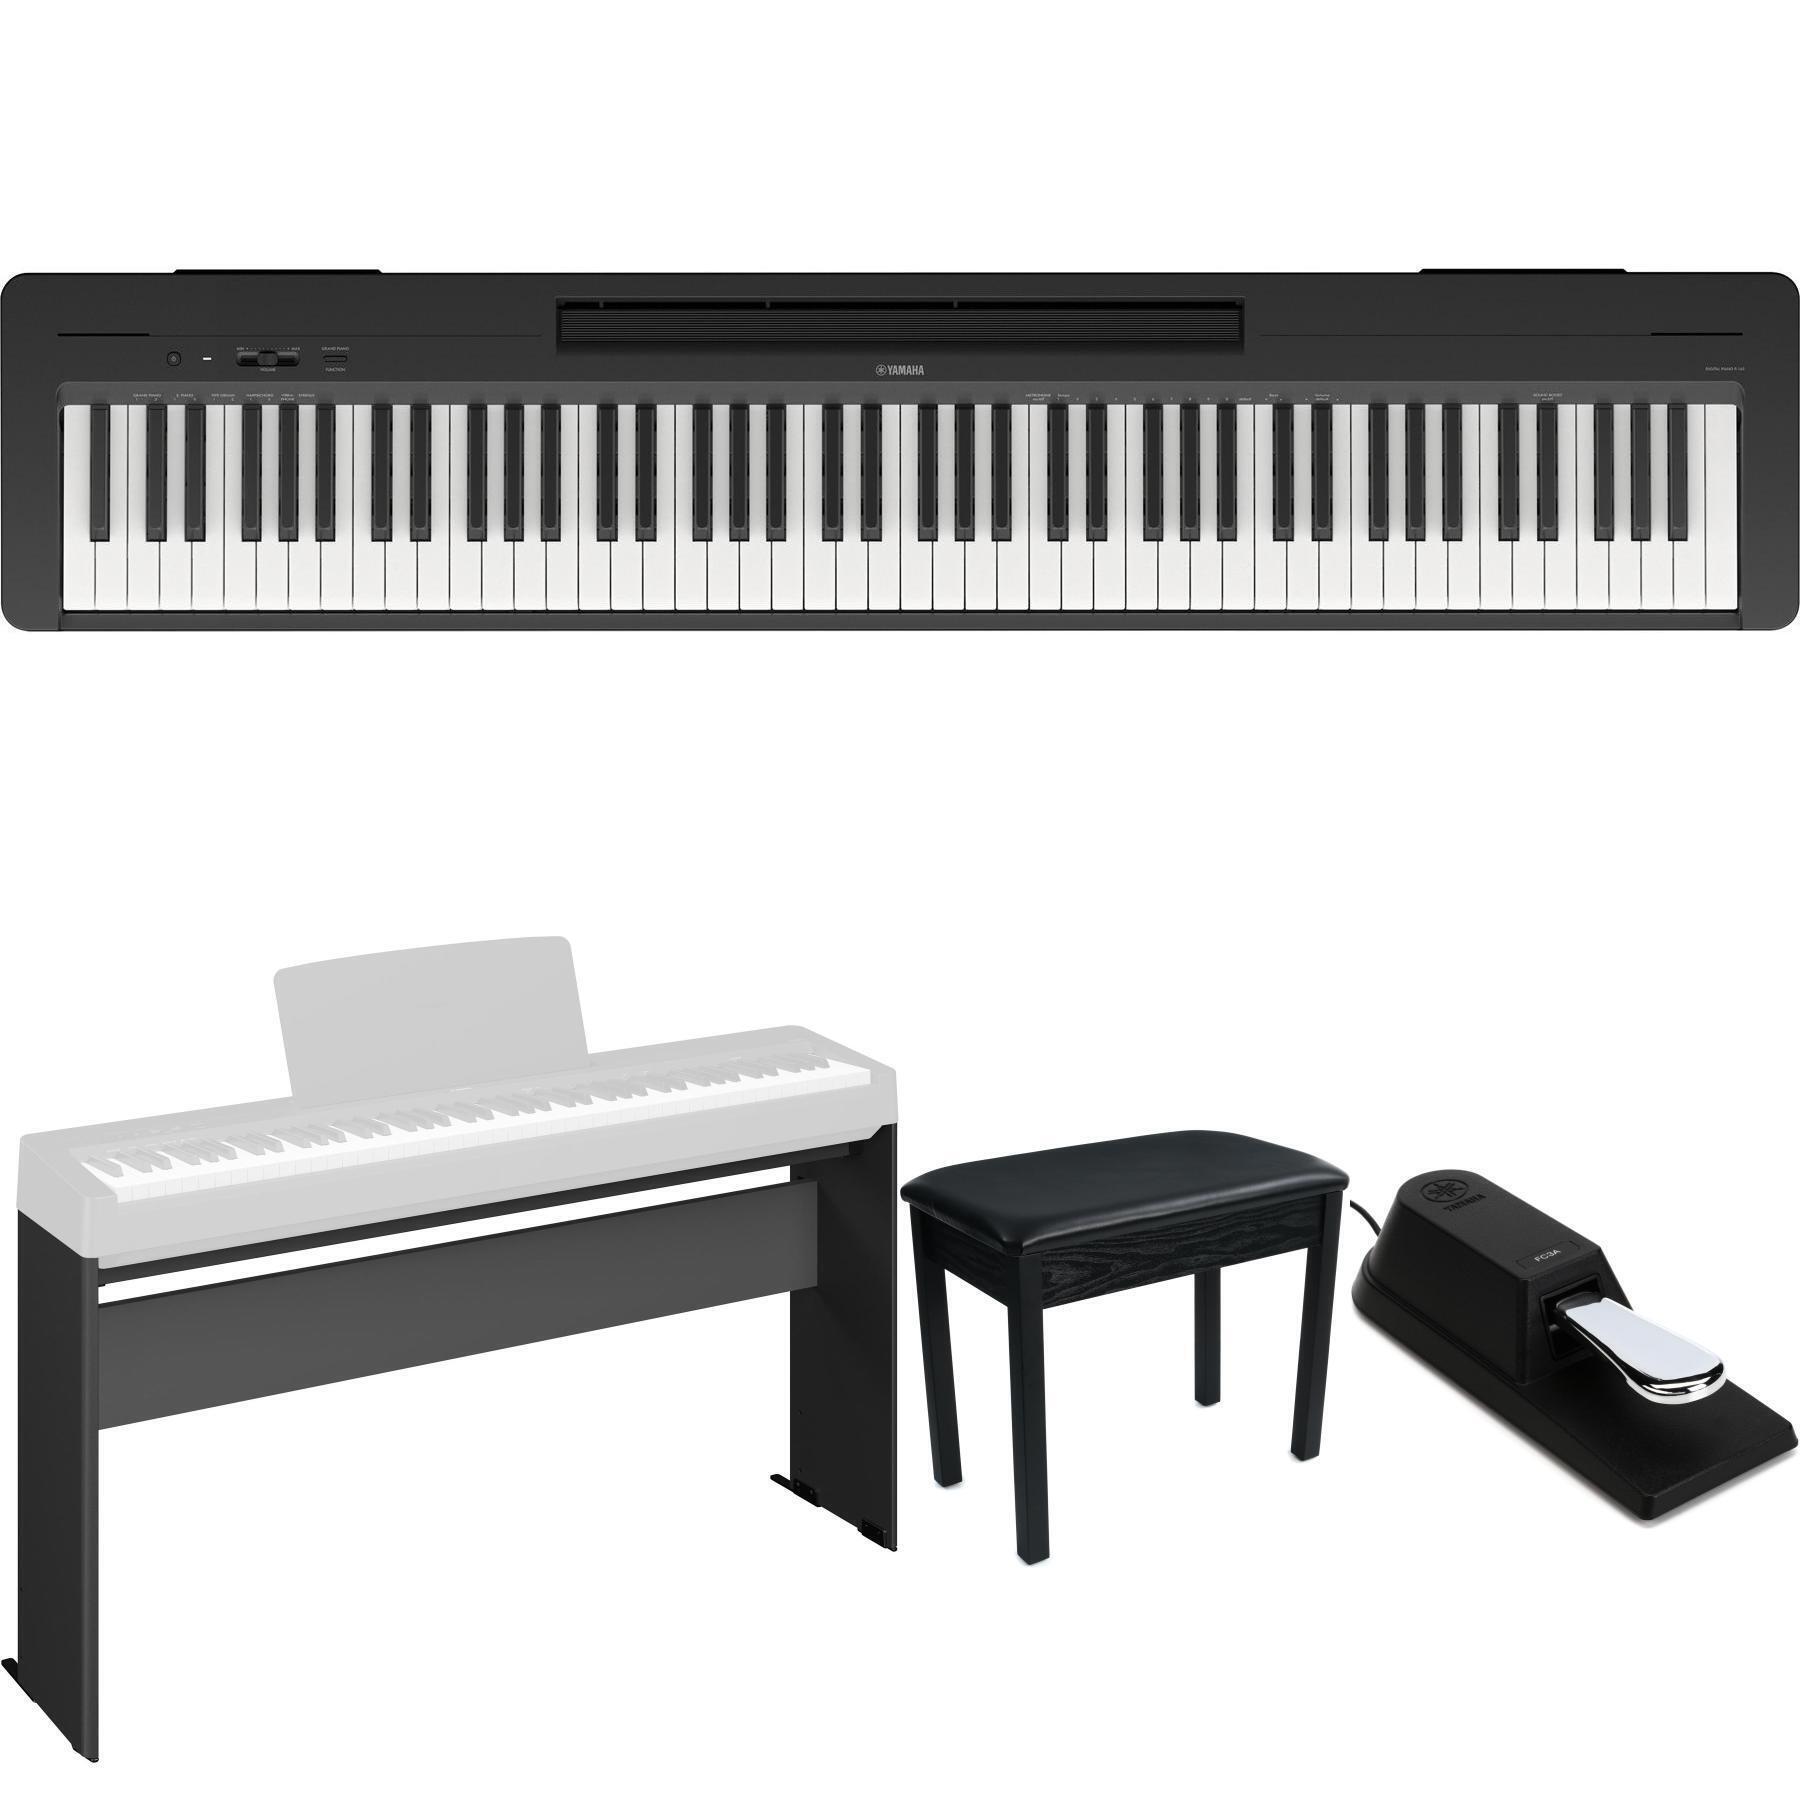 Yamaha P-143 88-key Digital Piano - Black